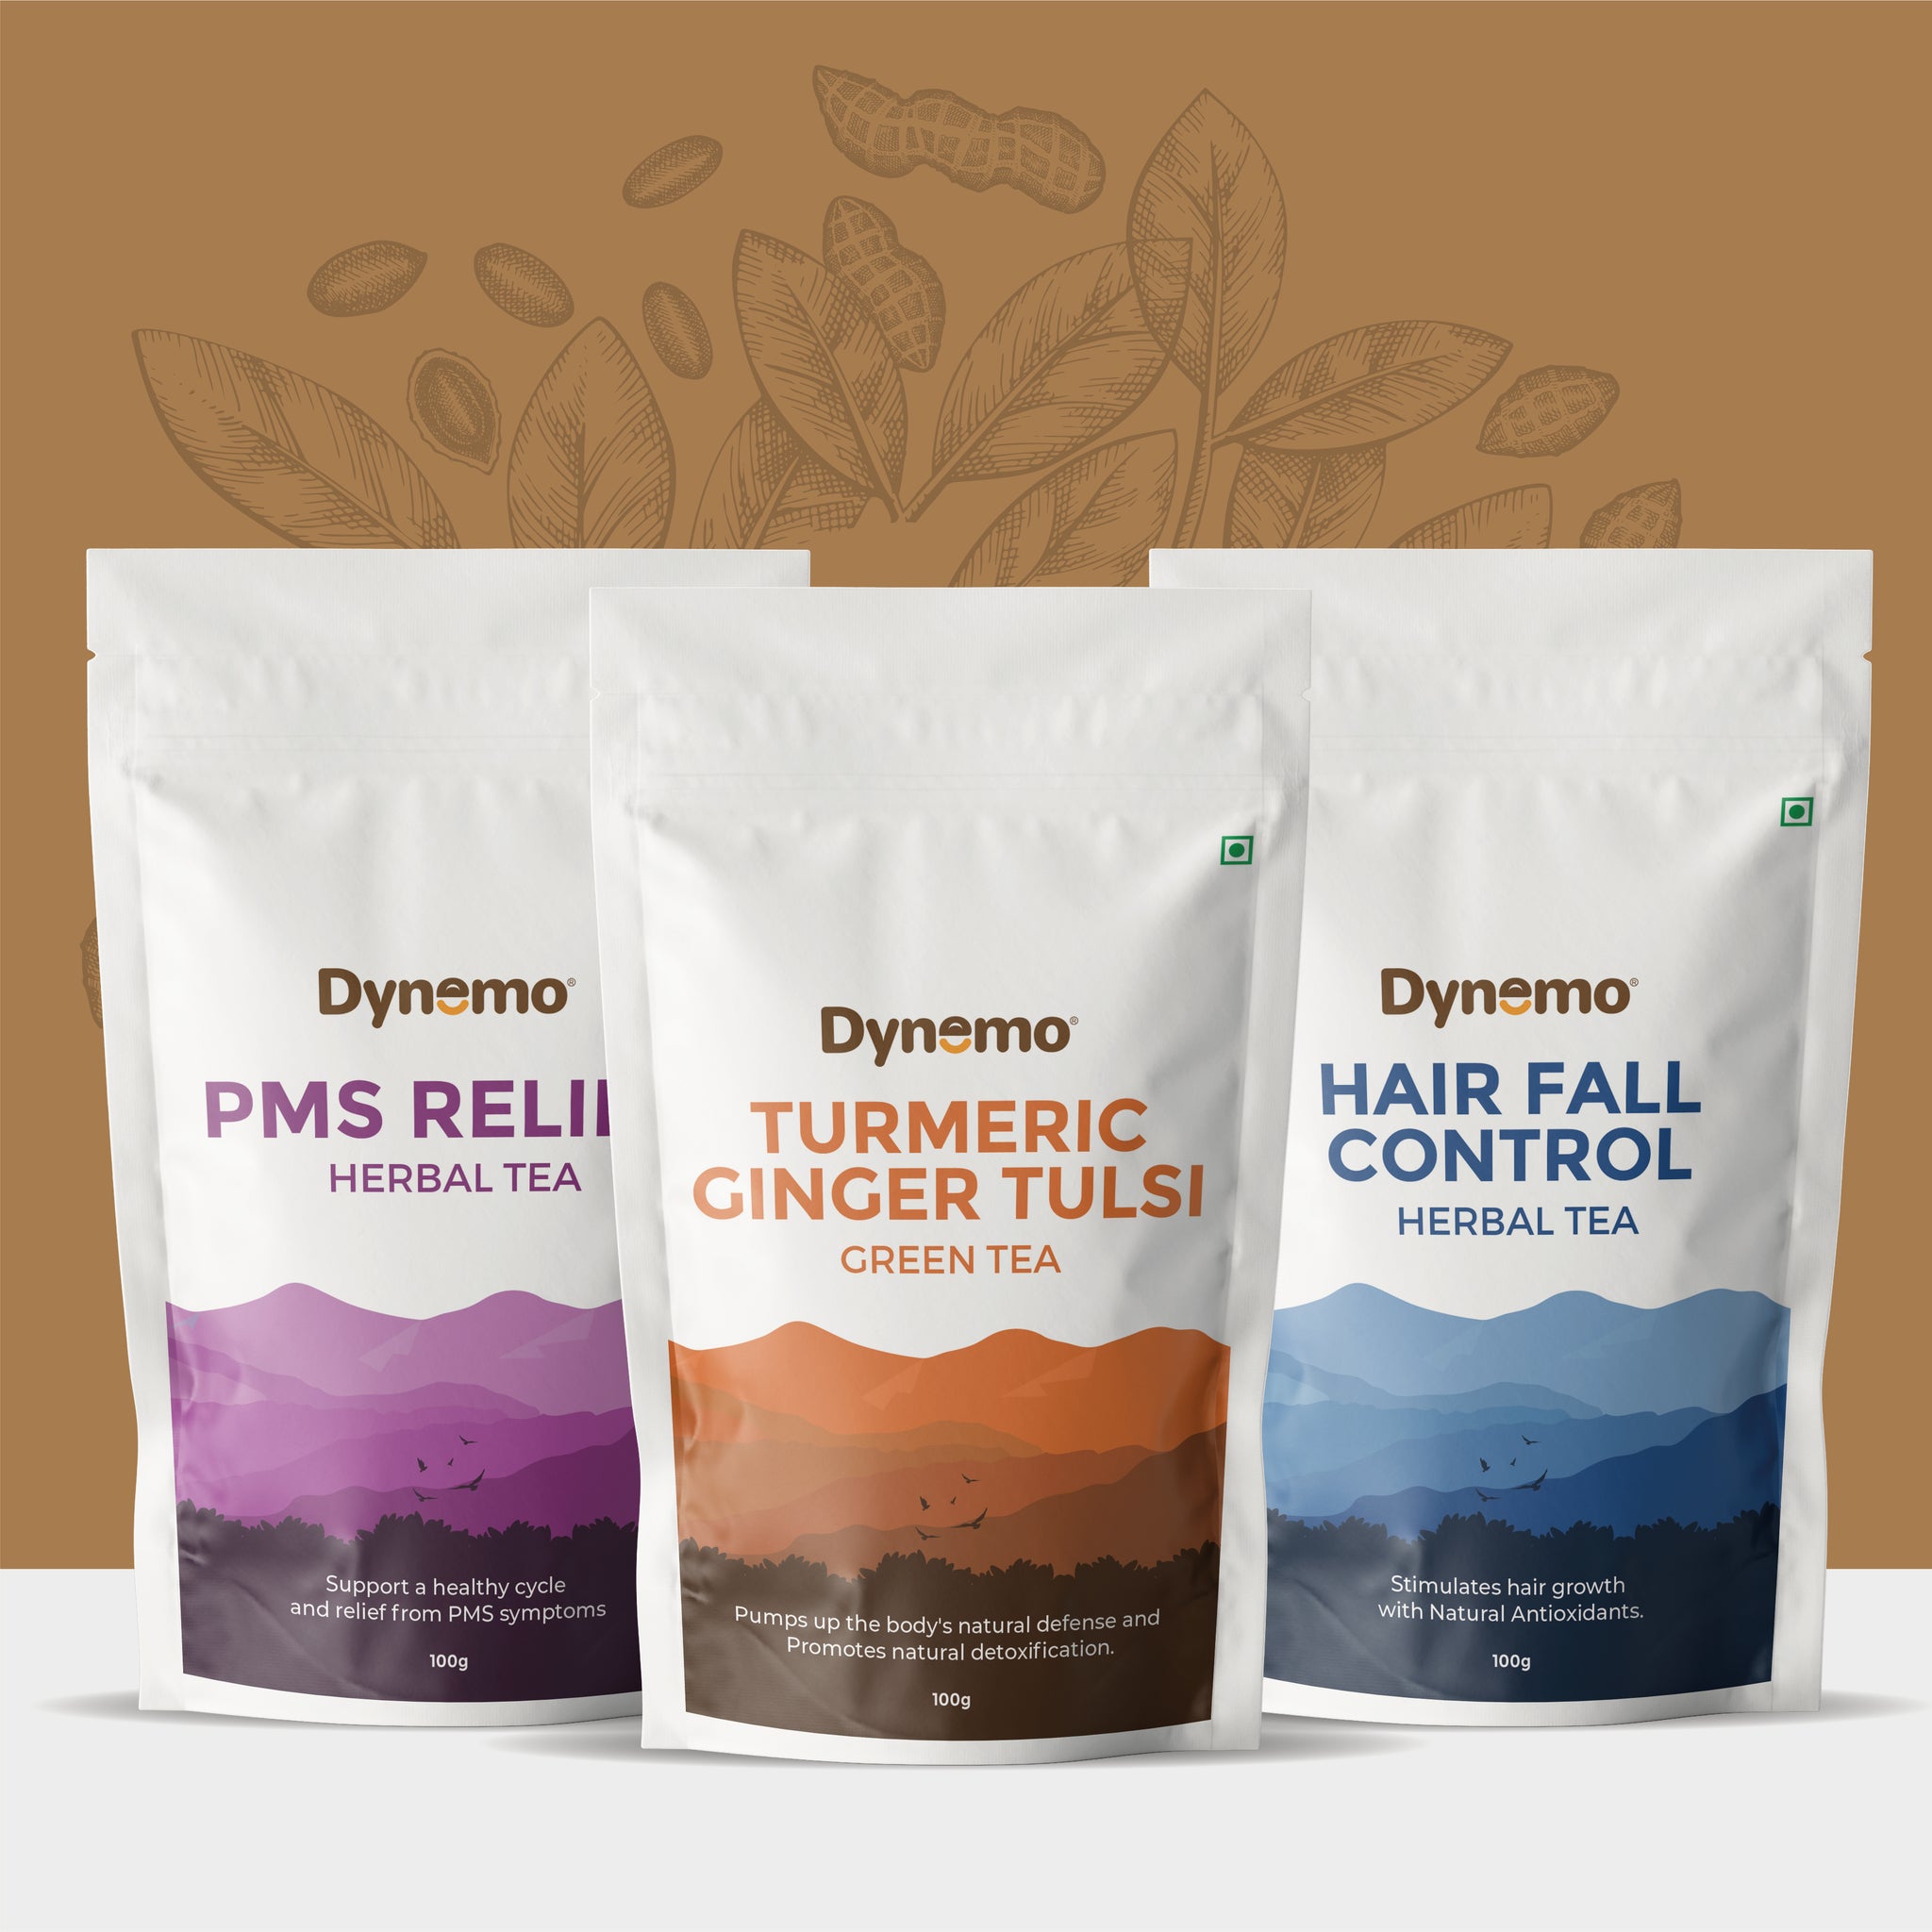 Dynemo Hair fall Control Herbal Tea 100 g + Dynemo PMS Relief Herbal Tea 100g + Dynemo Turmeric Ginger Tulsi Green Tea 100g